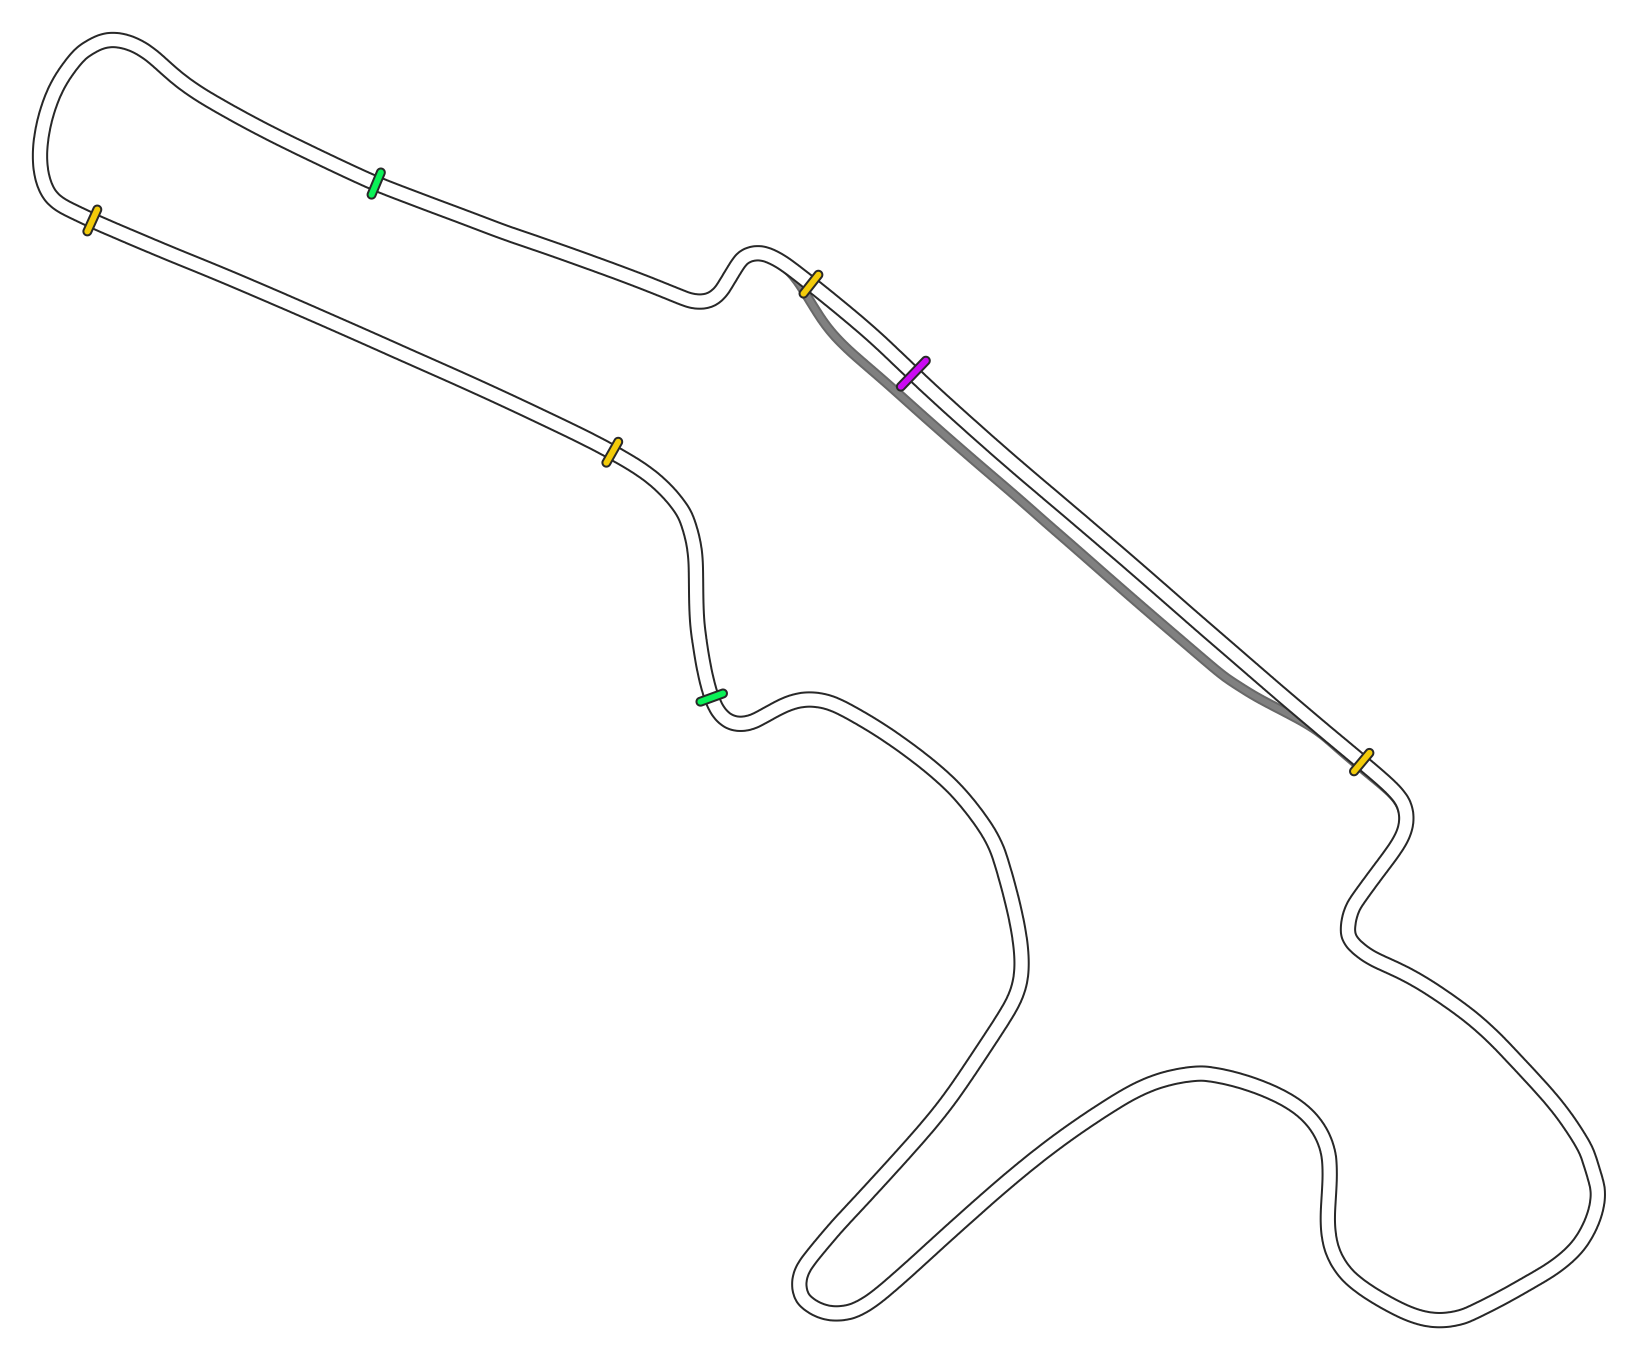 Helsinki International Circuit GP